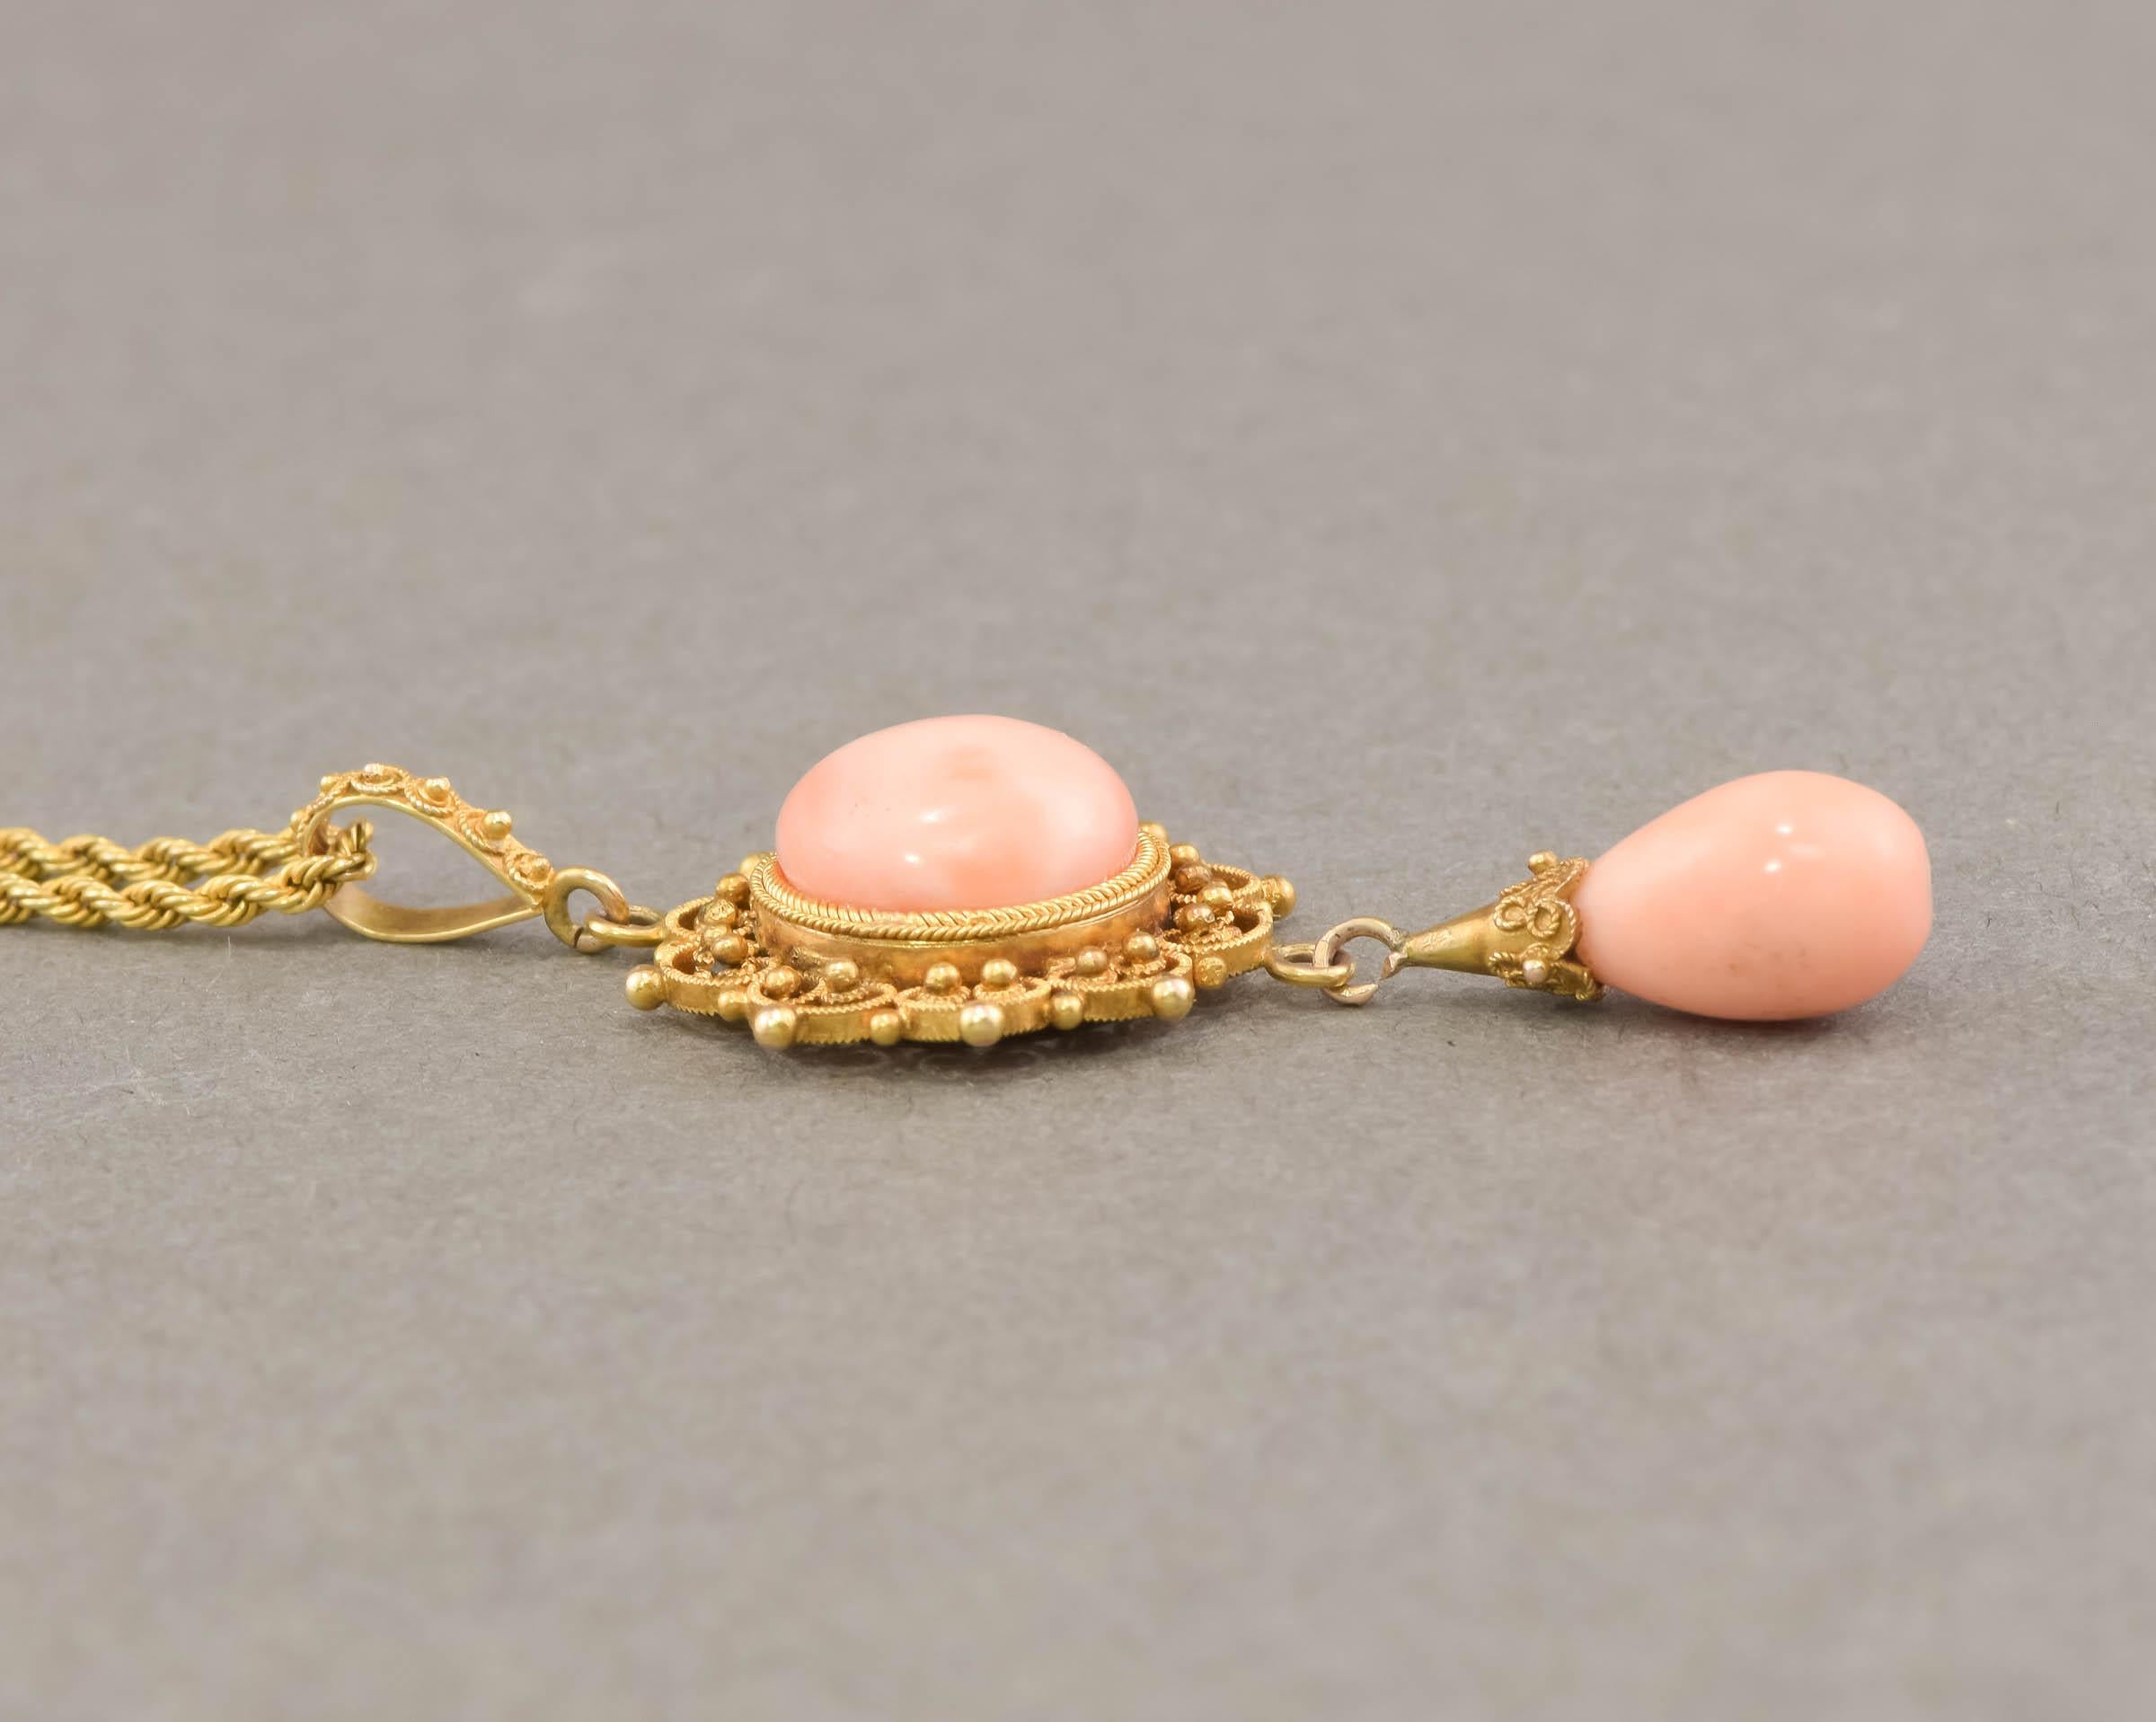 Antique Victorian Etruscan Revival 14K Gold Angel Skin Coral Necklace For Sale 2